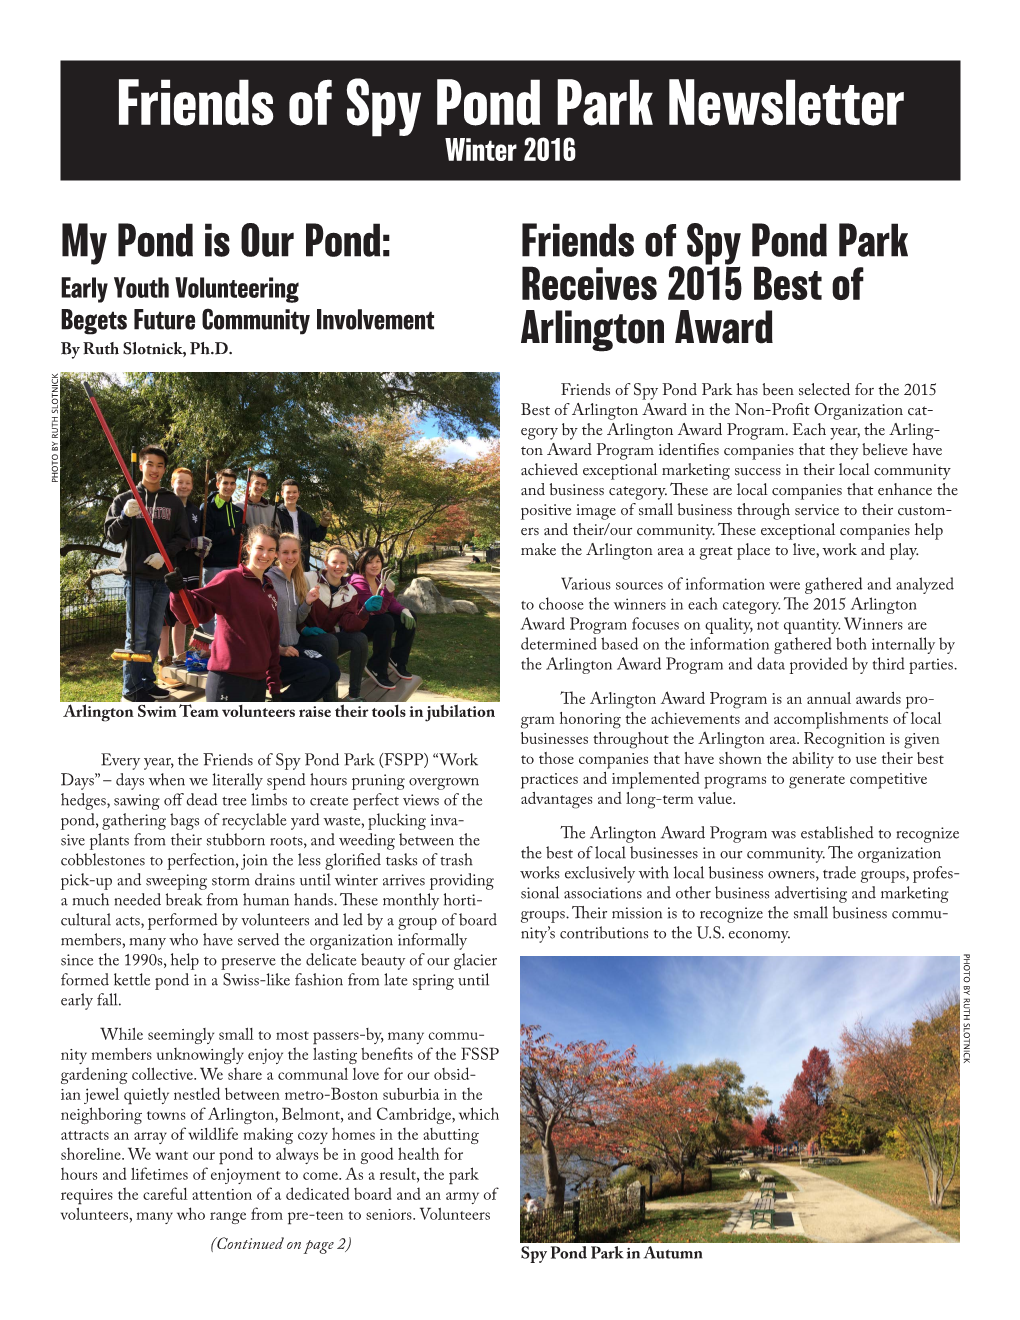 Friends of Spy Pond Park Newsletter Winter 2016